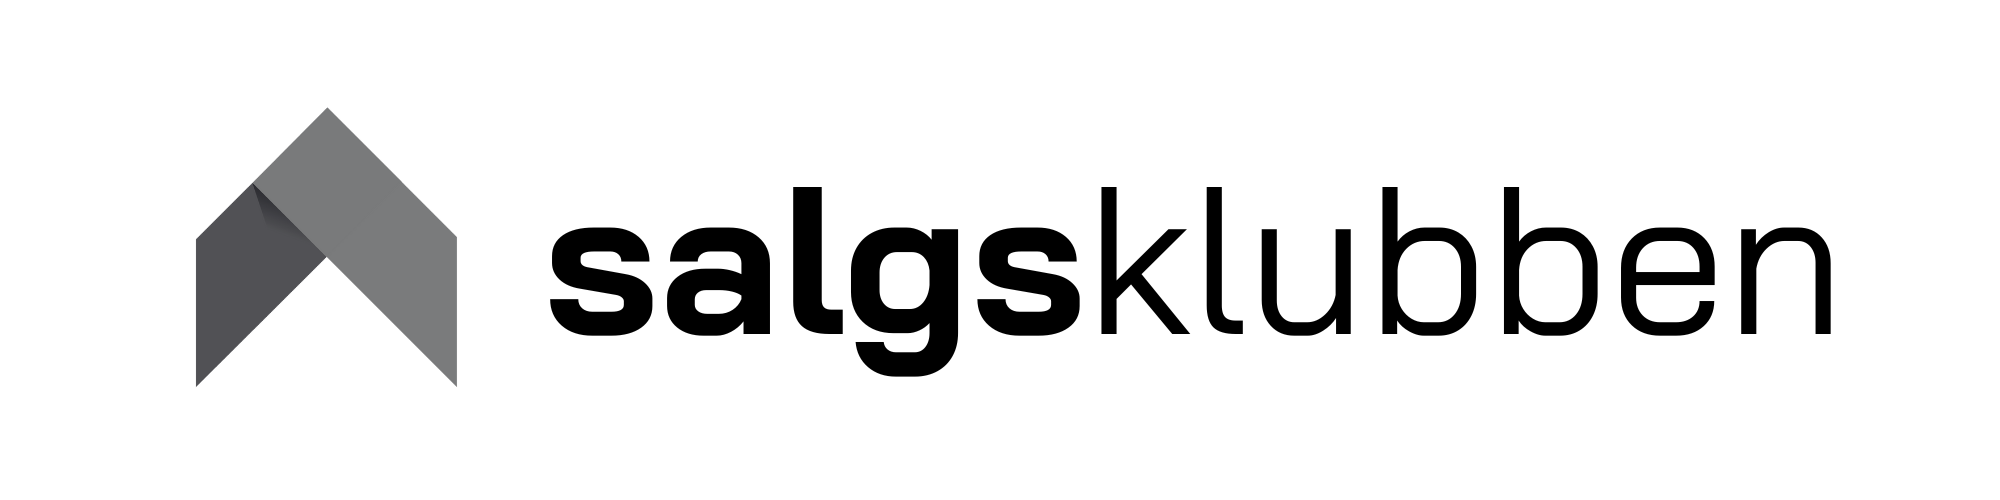 Salgsklubben logo